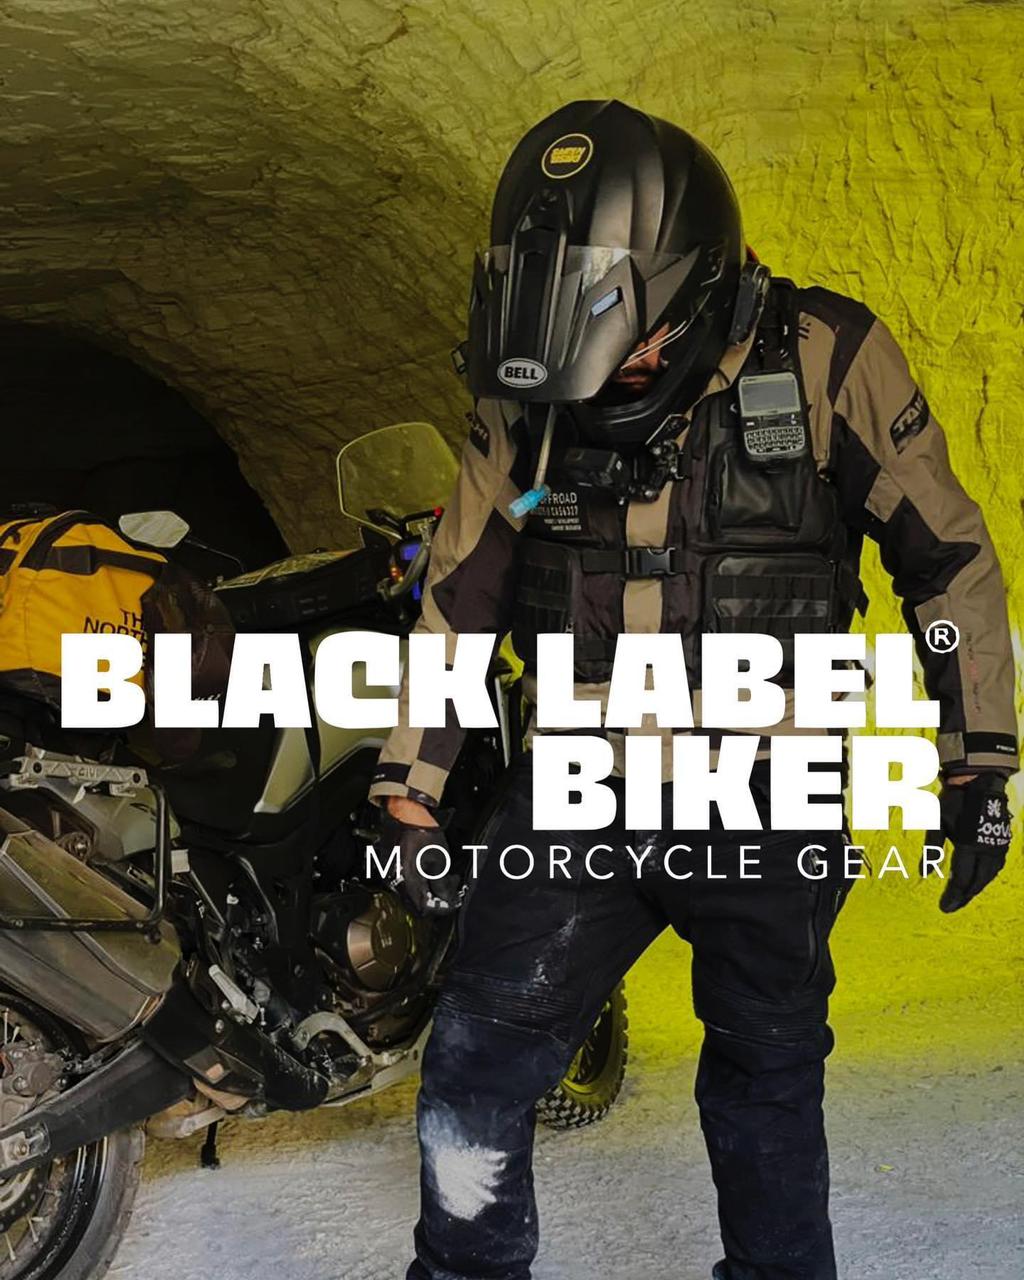 Pantalon Black Label Biker Baja 1000